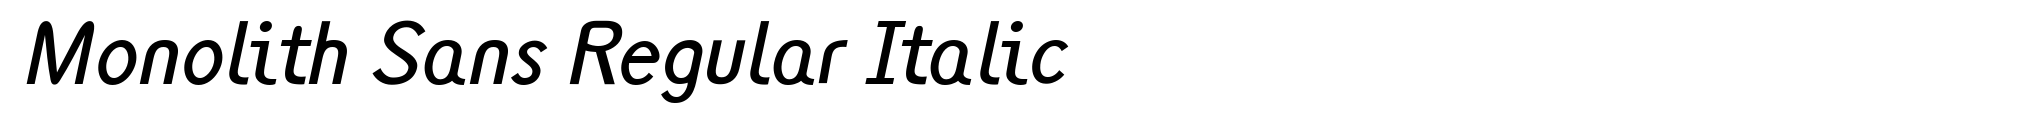 Monolith Sans Regular Italic image